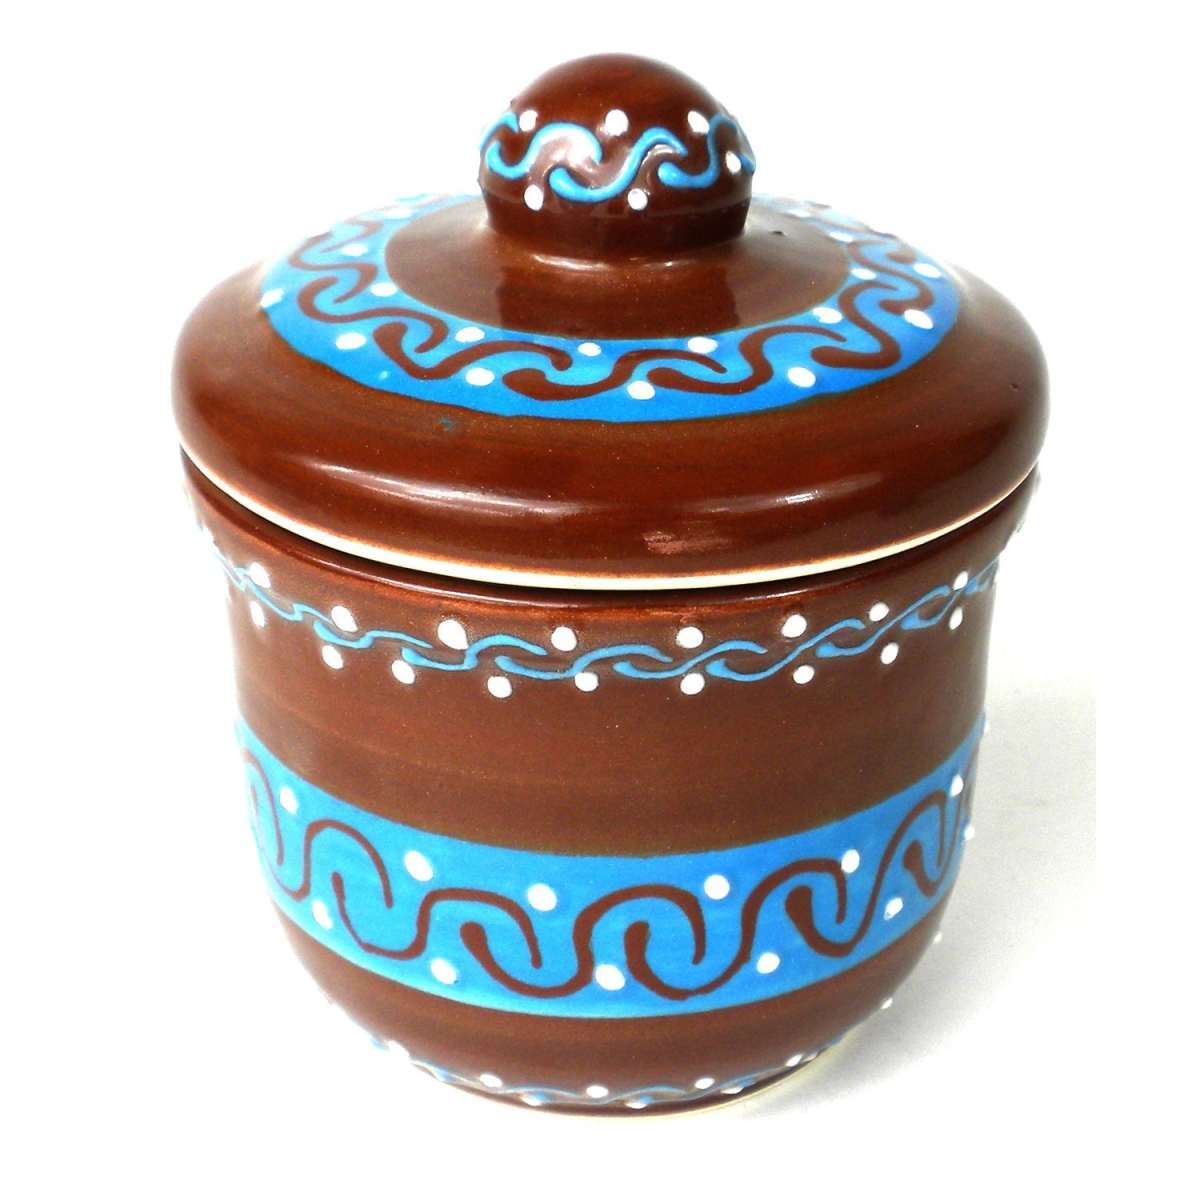 Mc094c Handmade & Fair Trade Sugar Bowl - Chocolate